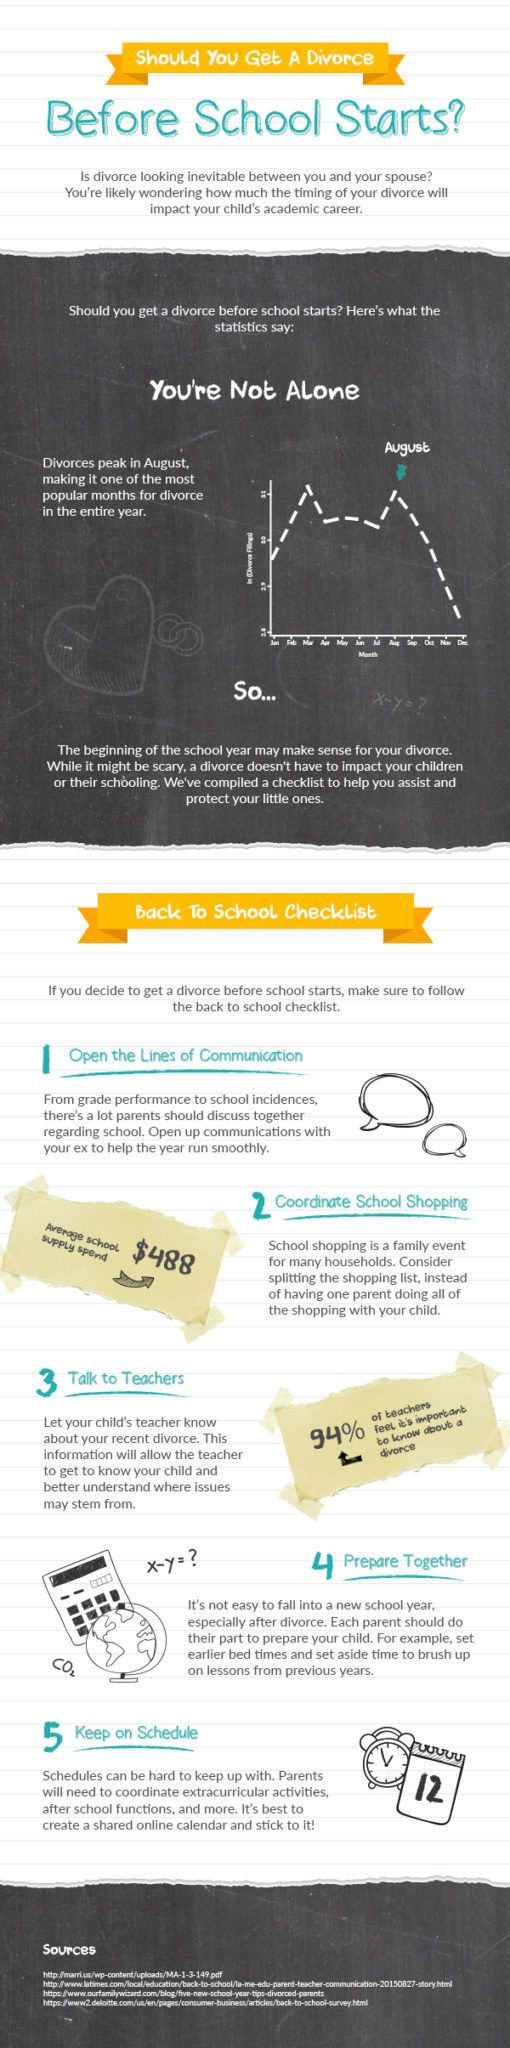 Divorce-Before-School-Starts-infographic-plaza